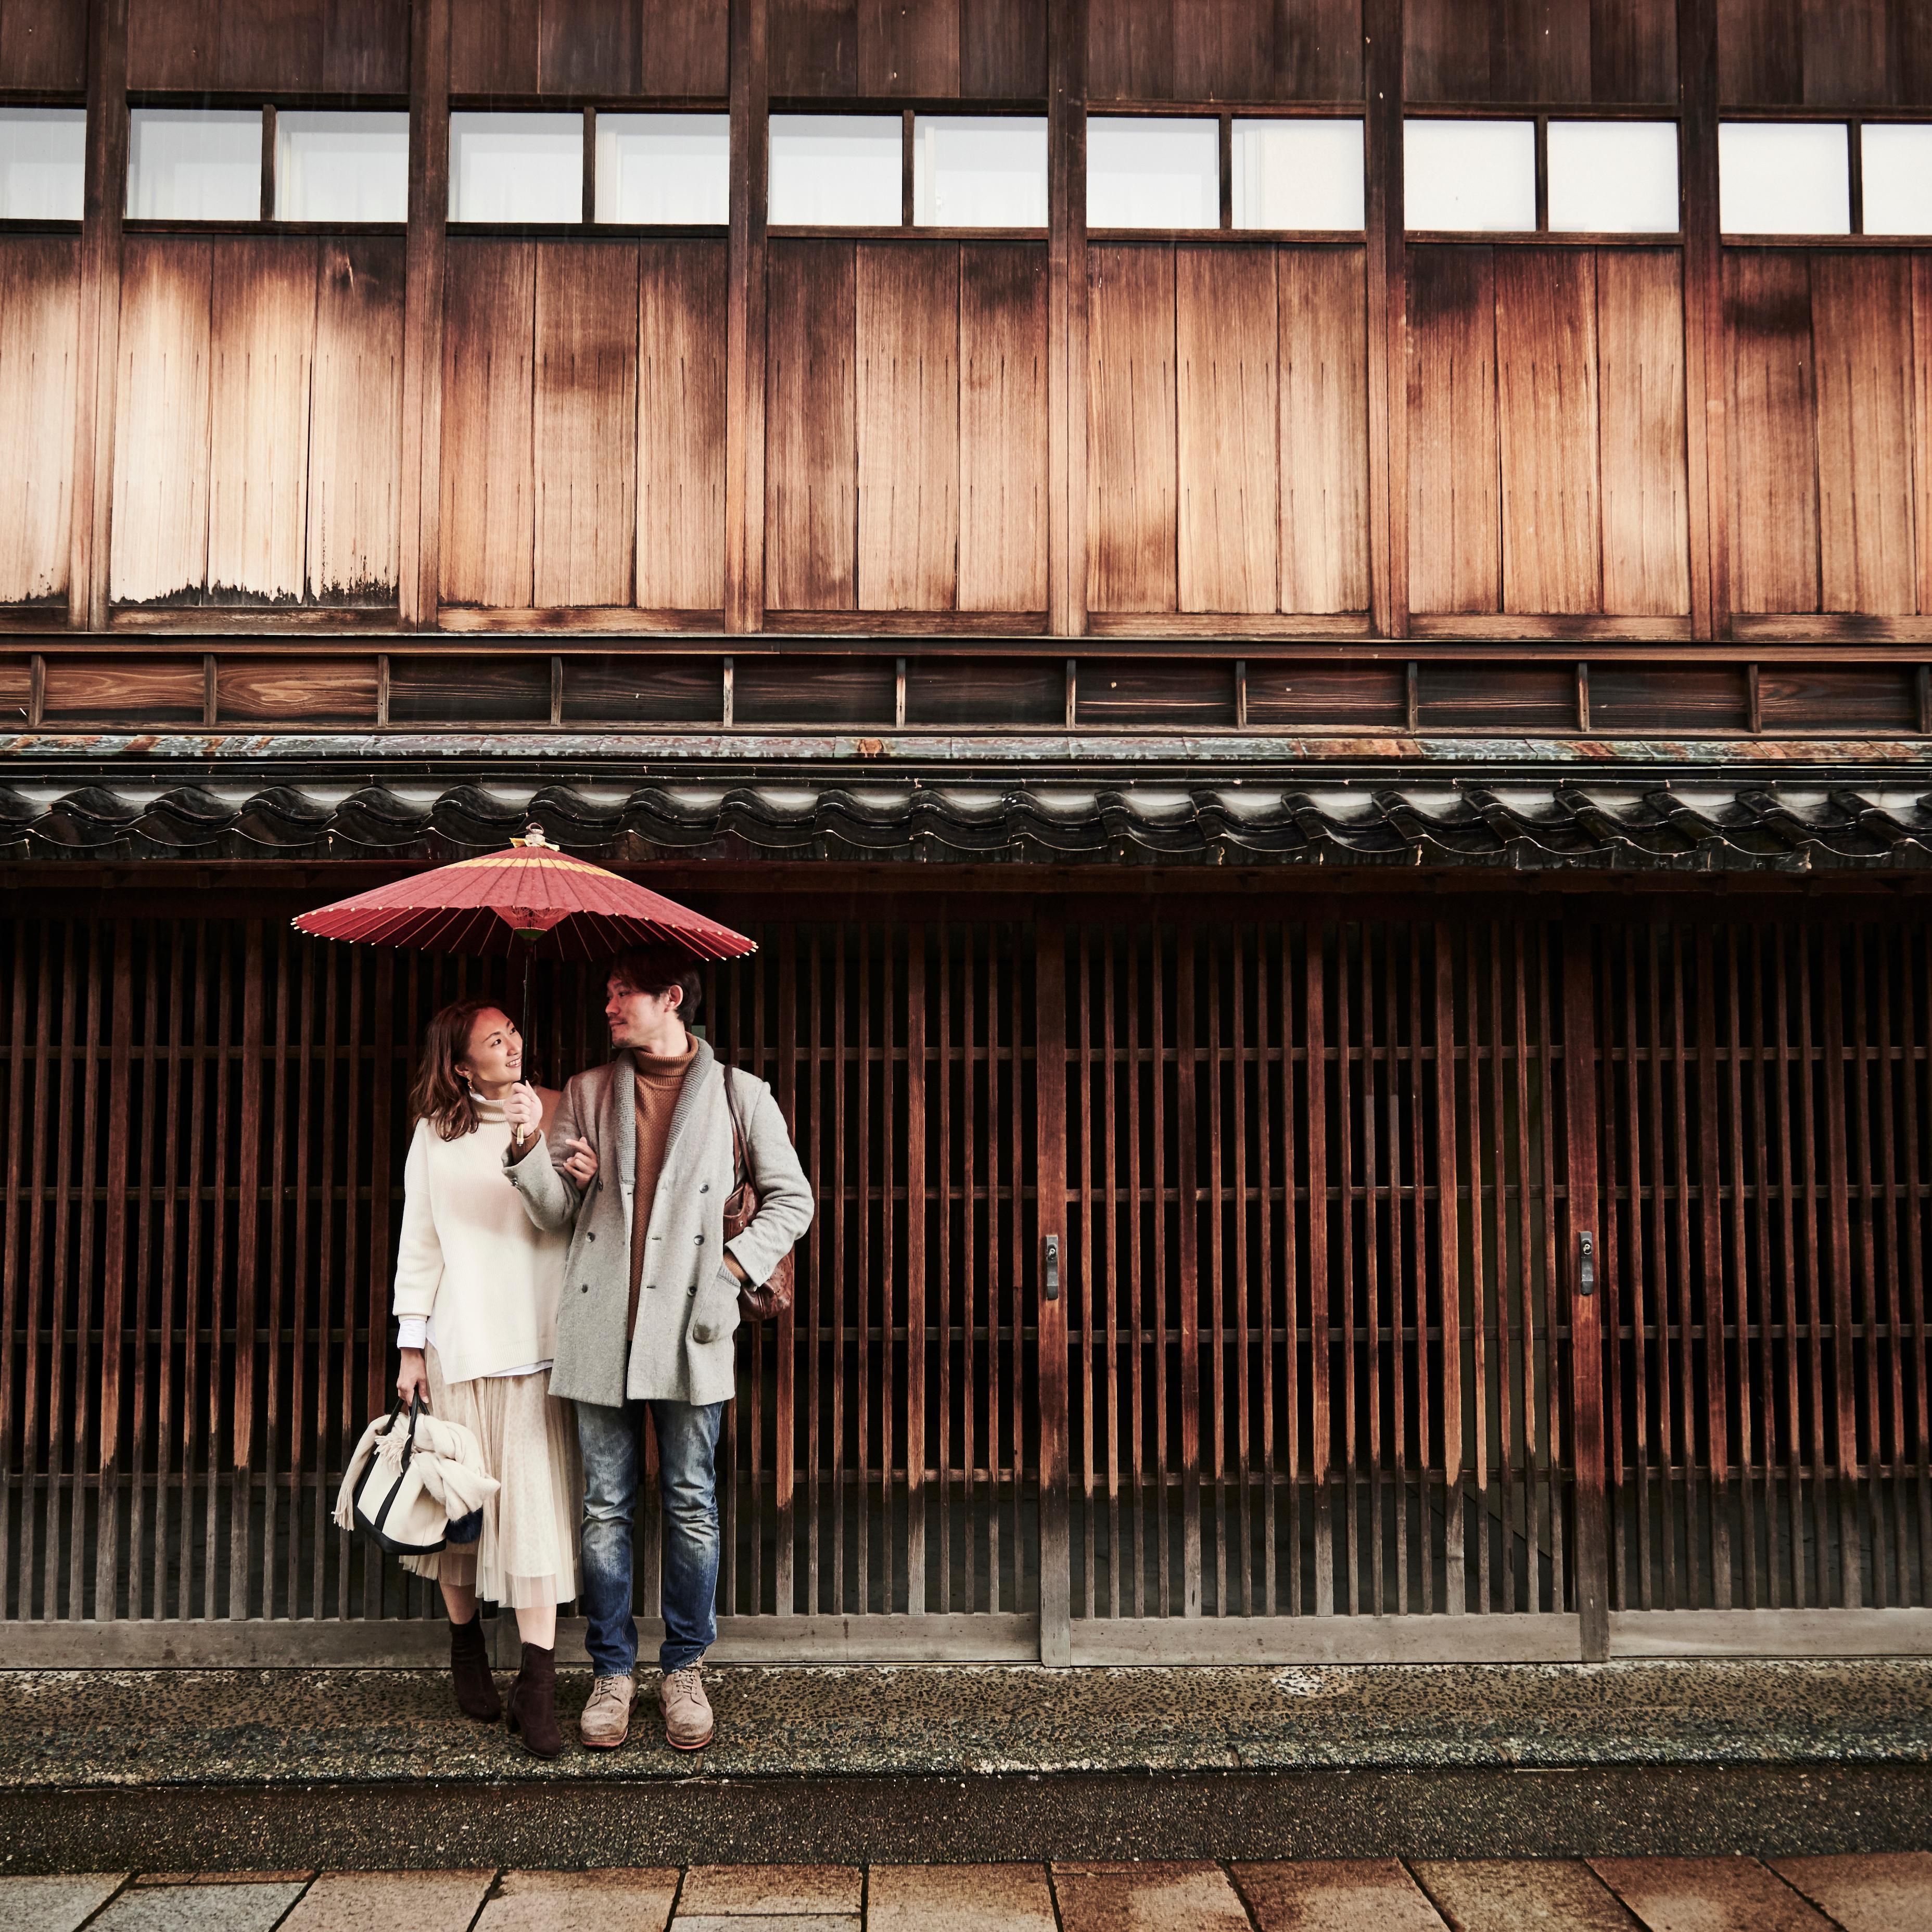 Beautiful Kanazawa: A scene in the Higashi Chaya district